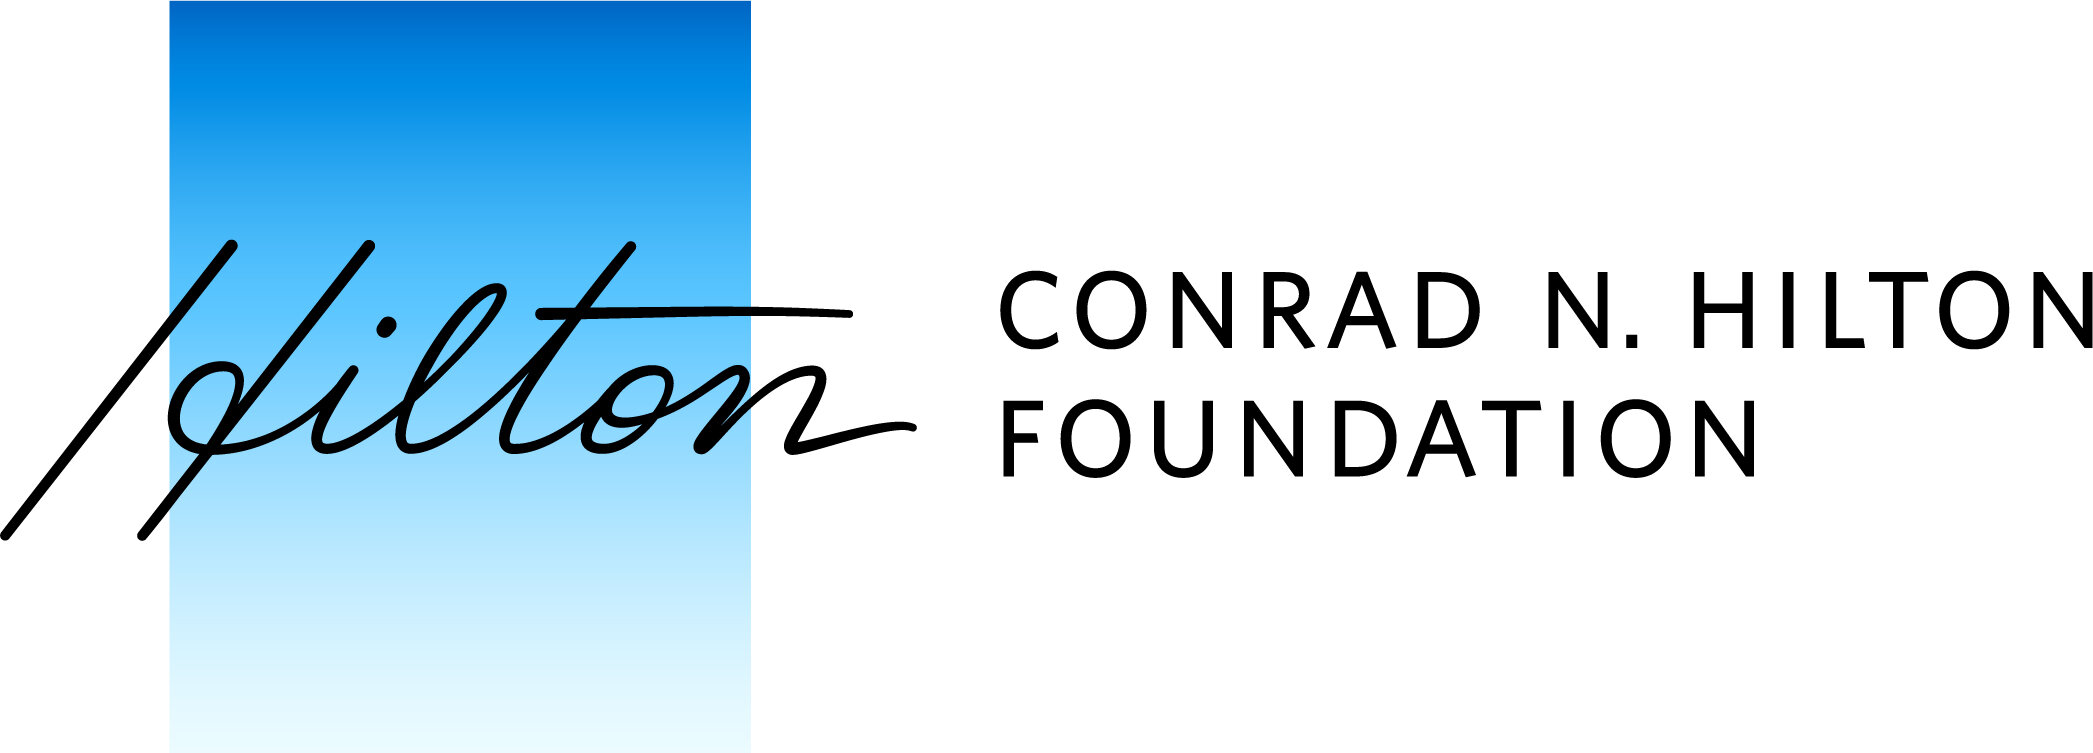 Conrad Hilton Foundation.jpg